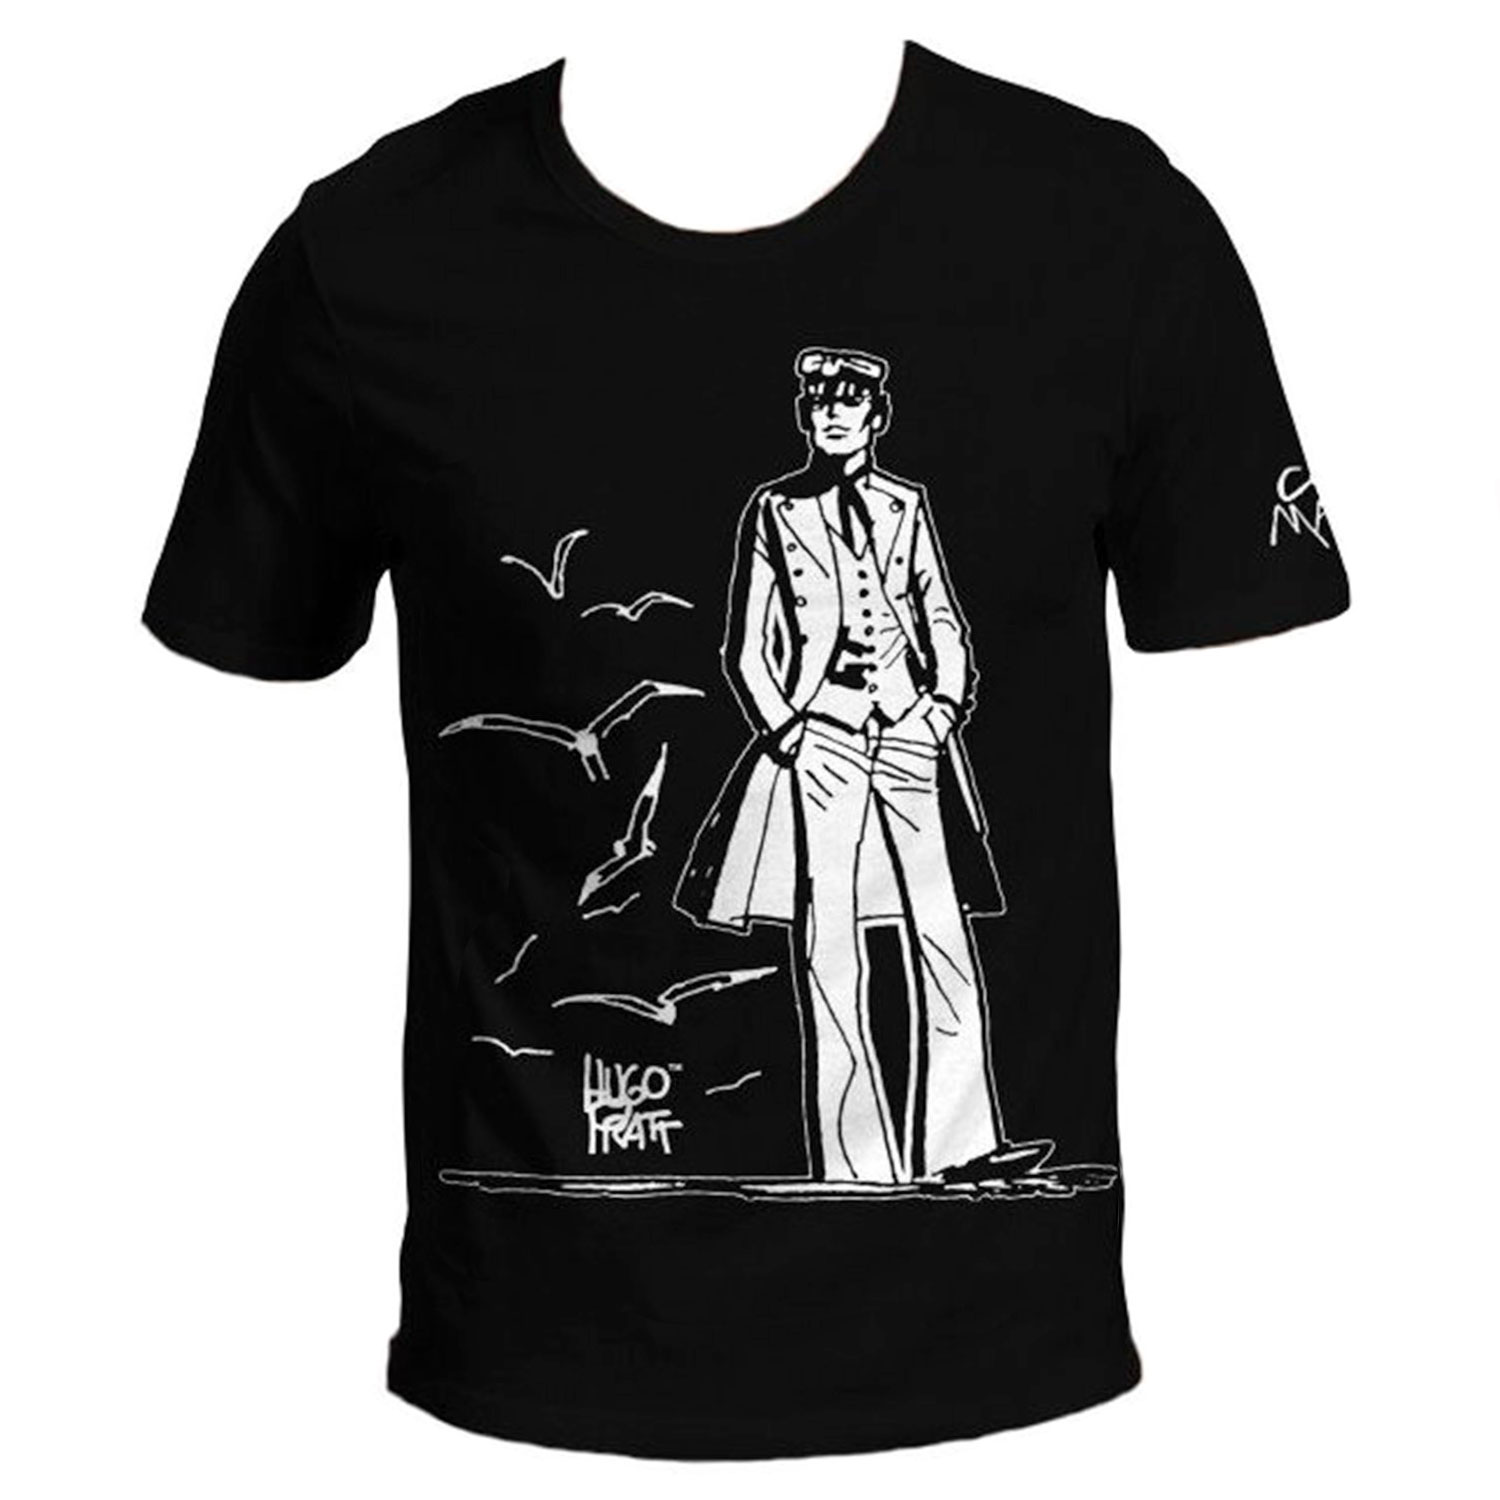 T-shirt Hugo Pratt : Corto Maltés, 40 años ! - Negro - Tamaño S